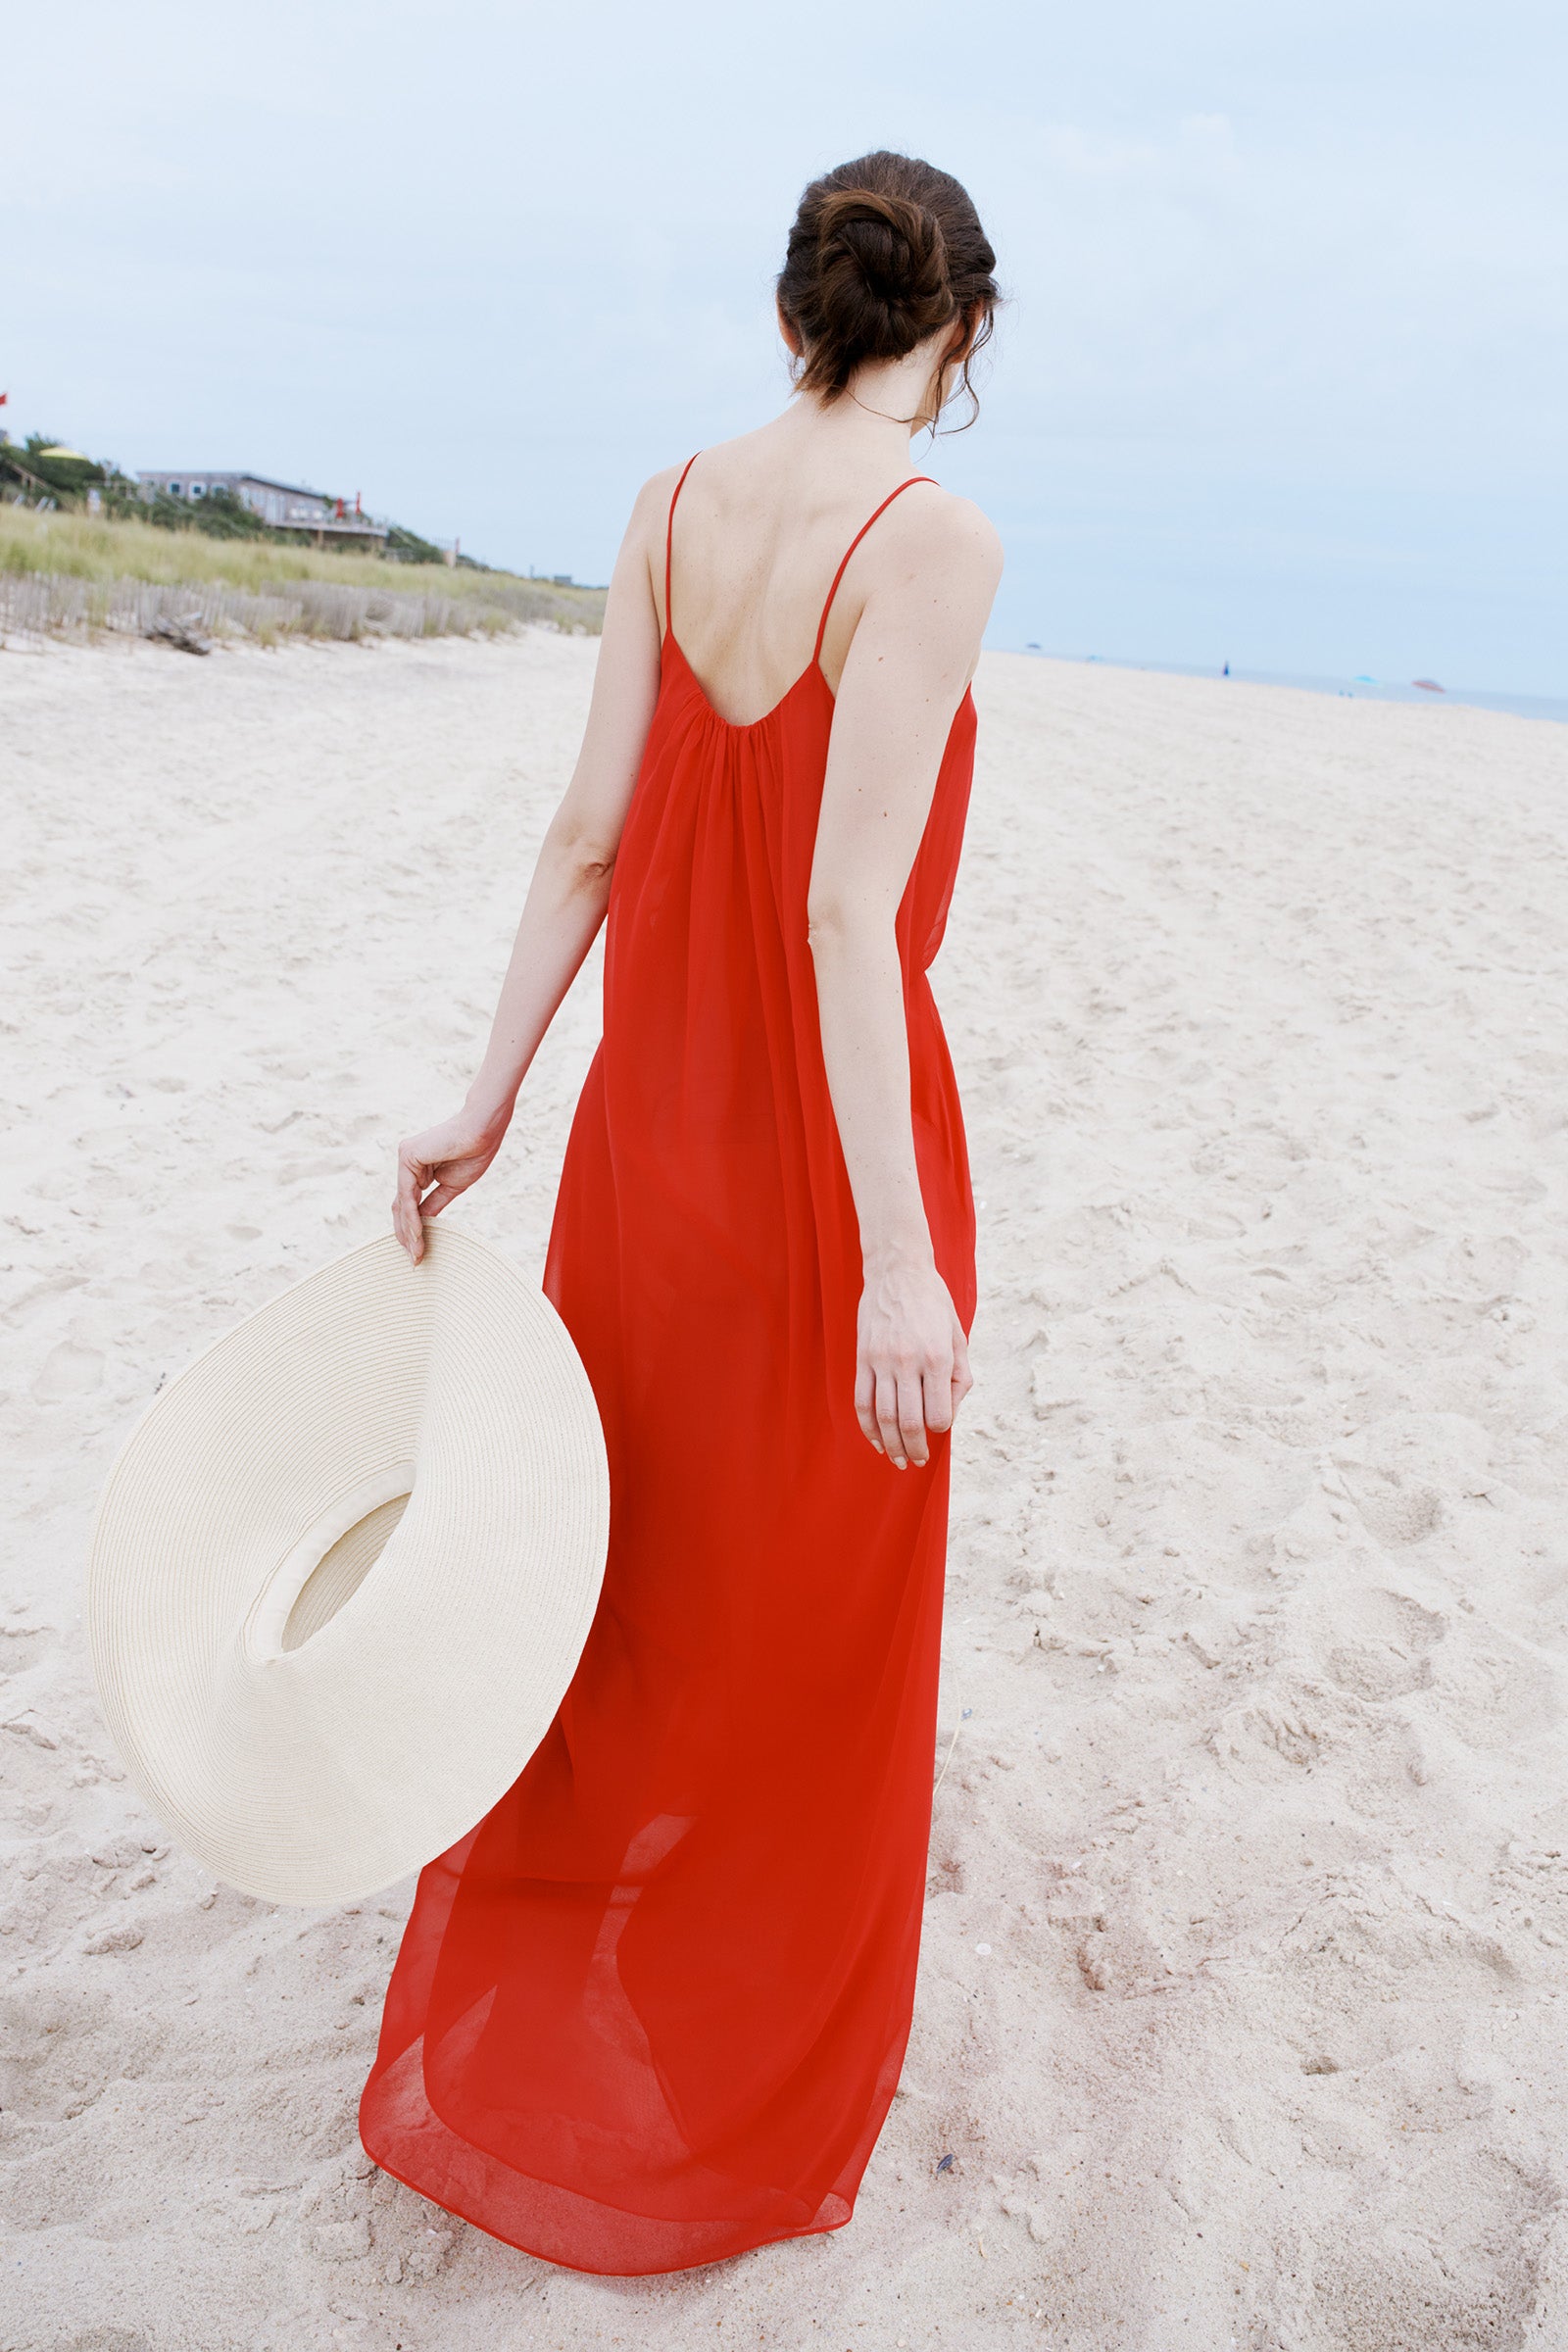 Kal Rieman Cora Shirred Maxi Dress in Red on model lookbook image on beach